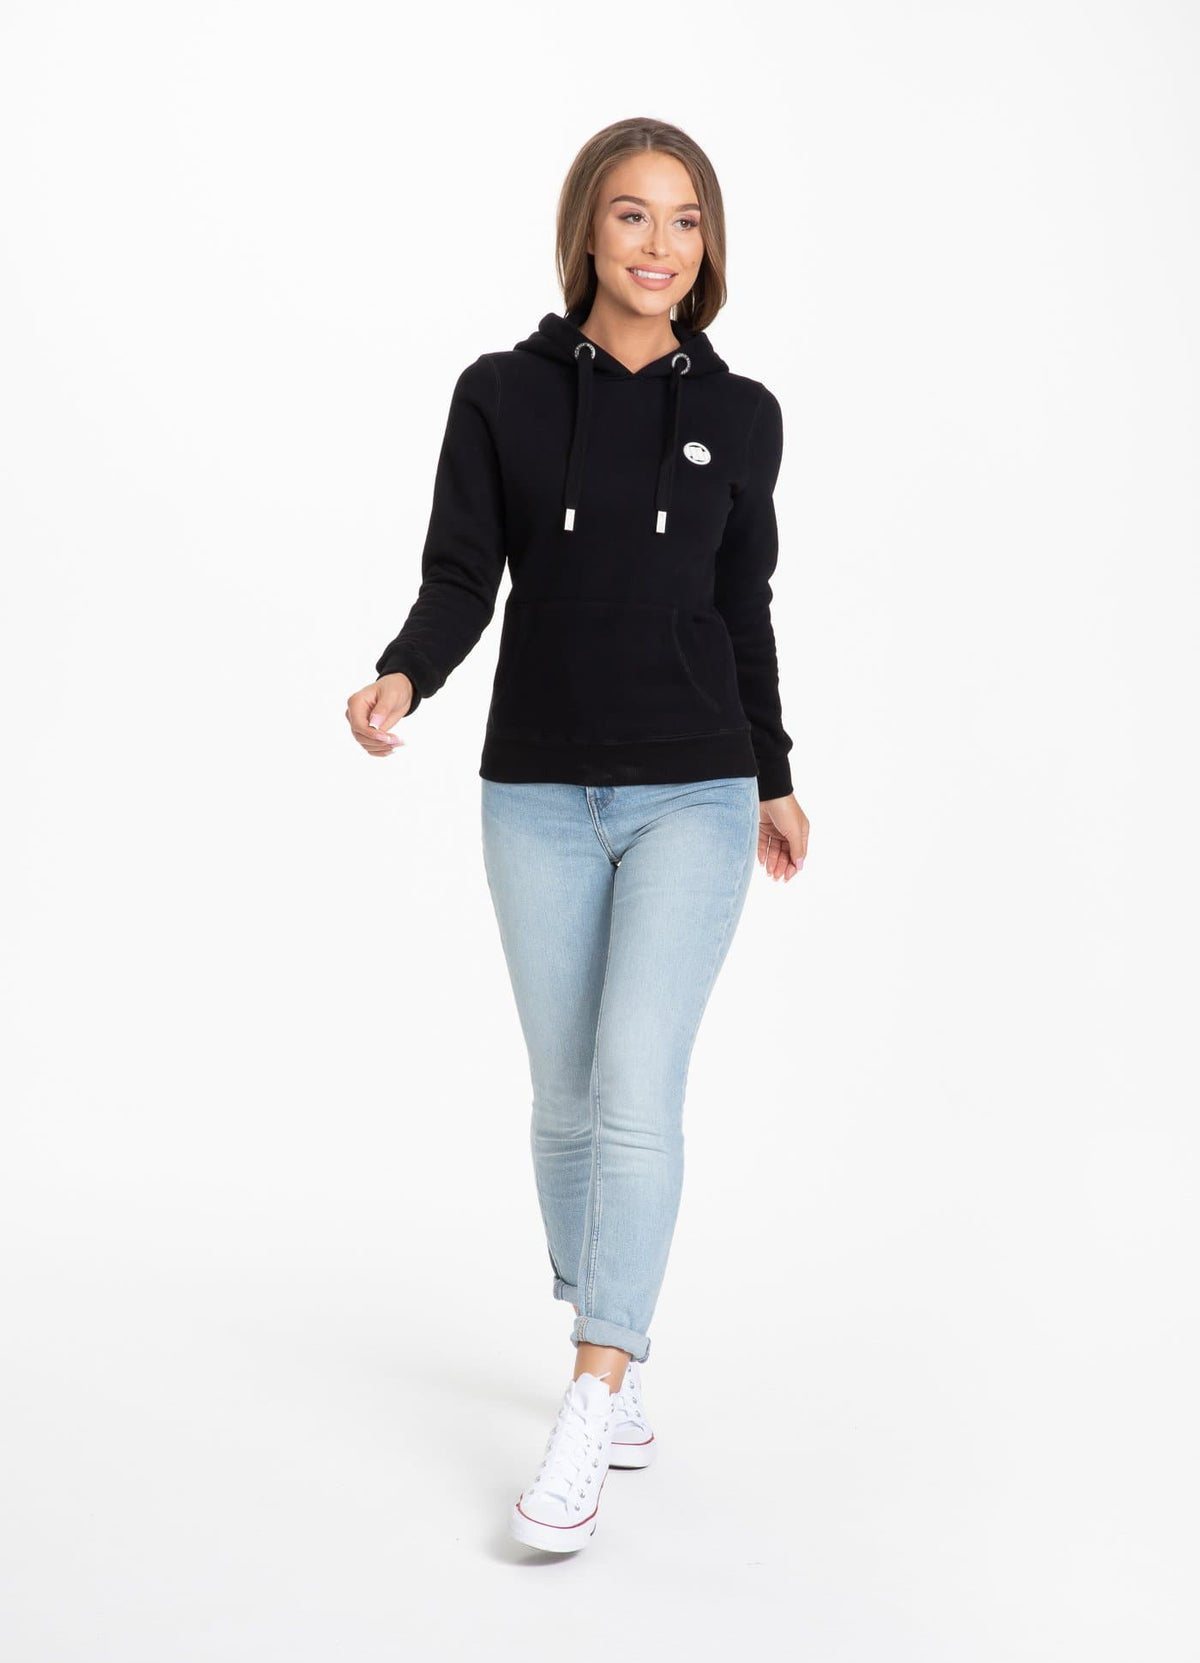 Women's hoodie SMALL LOGO Black - Pitbull West Coast International Store 